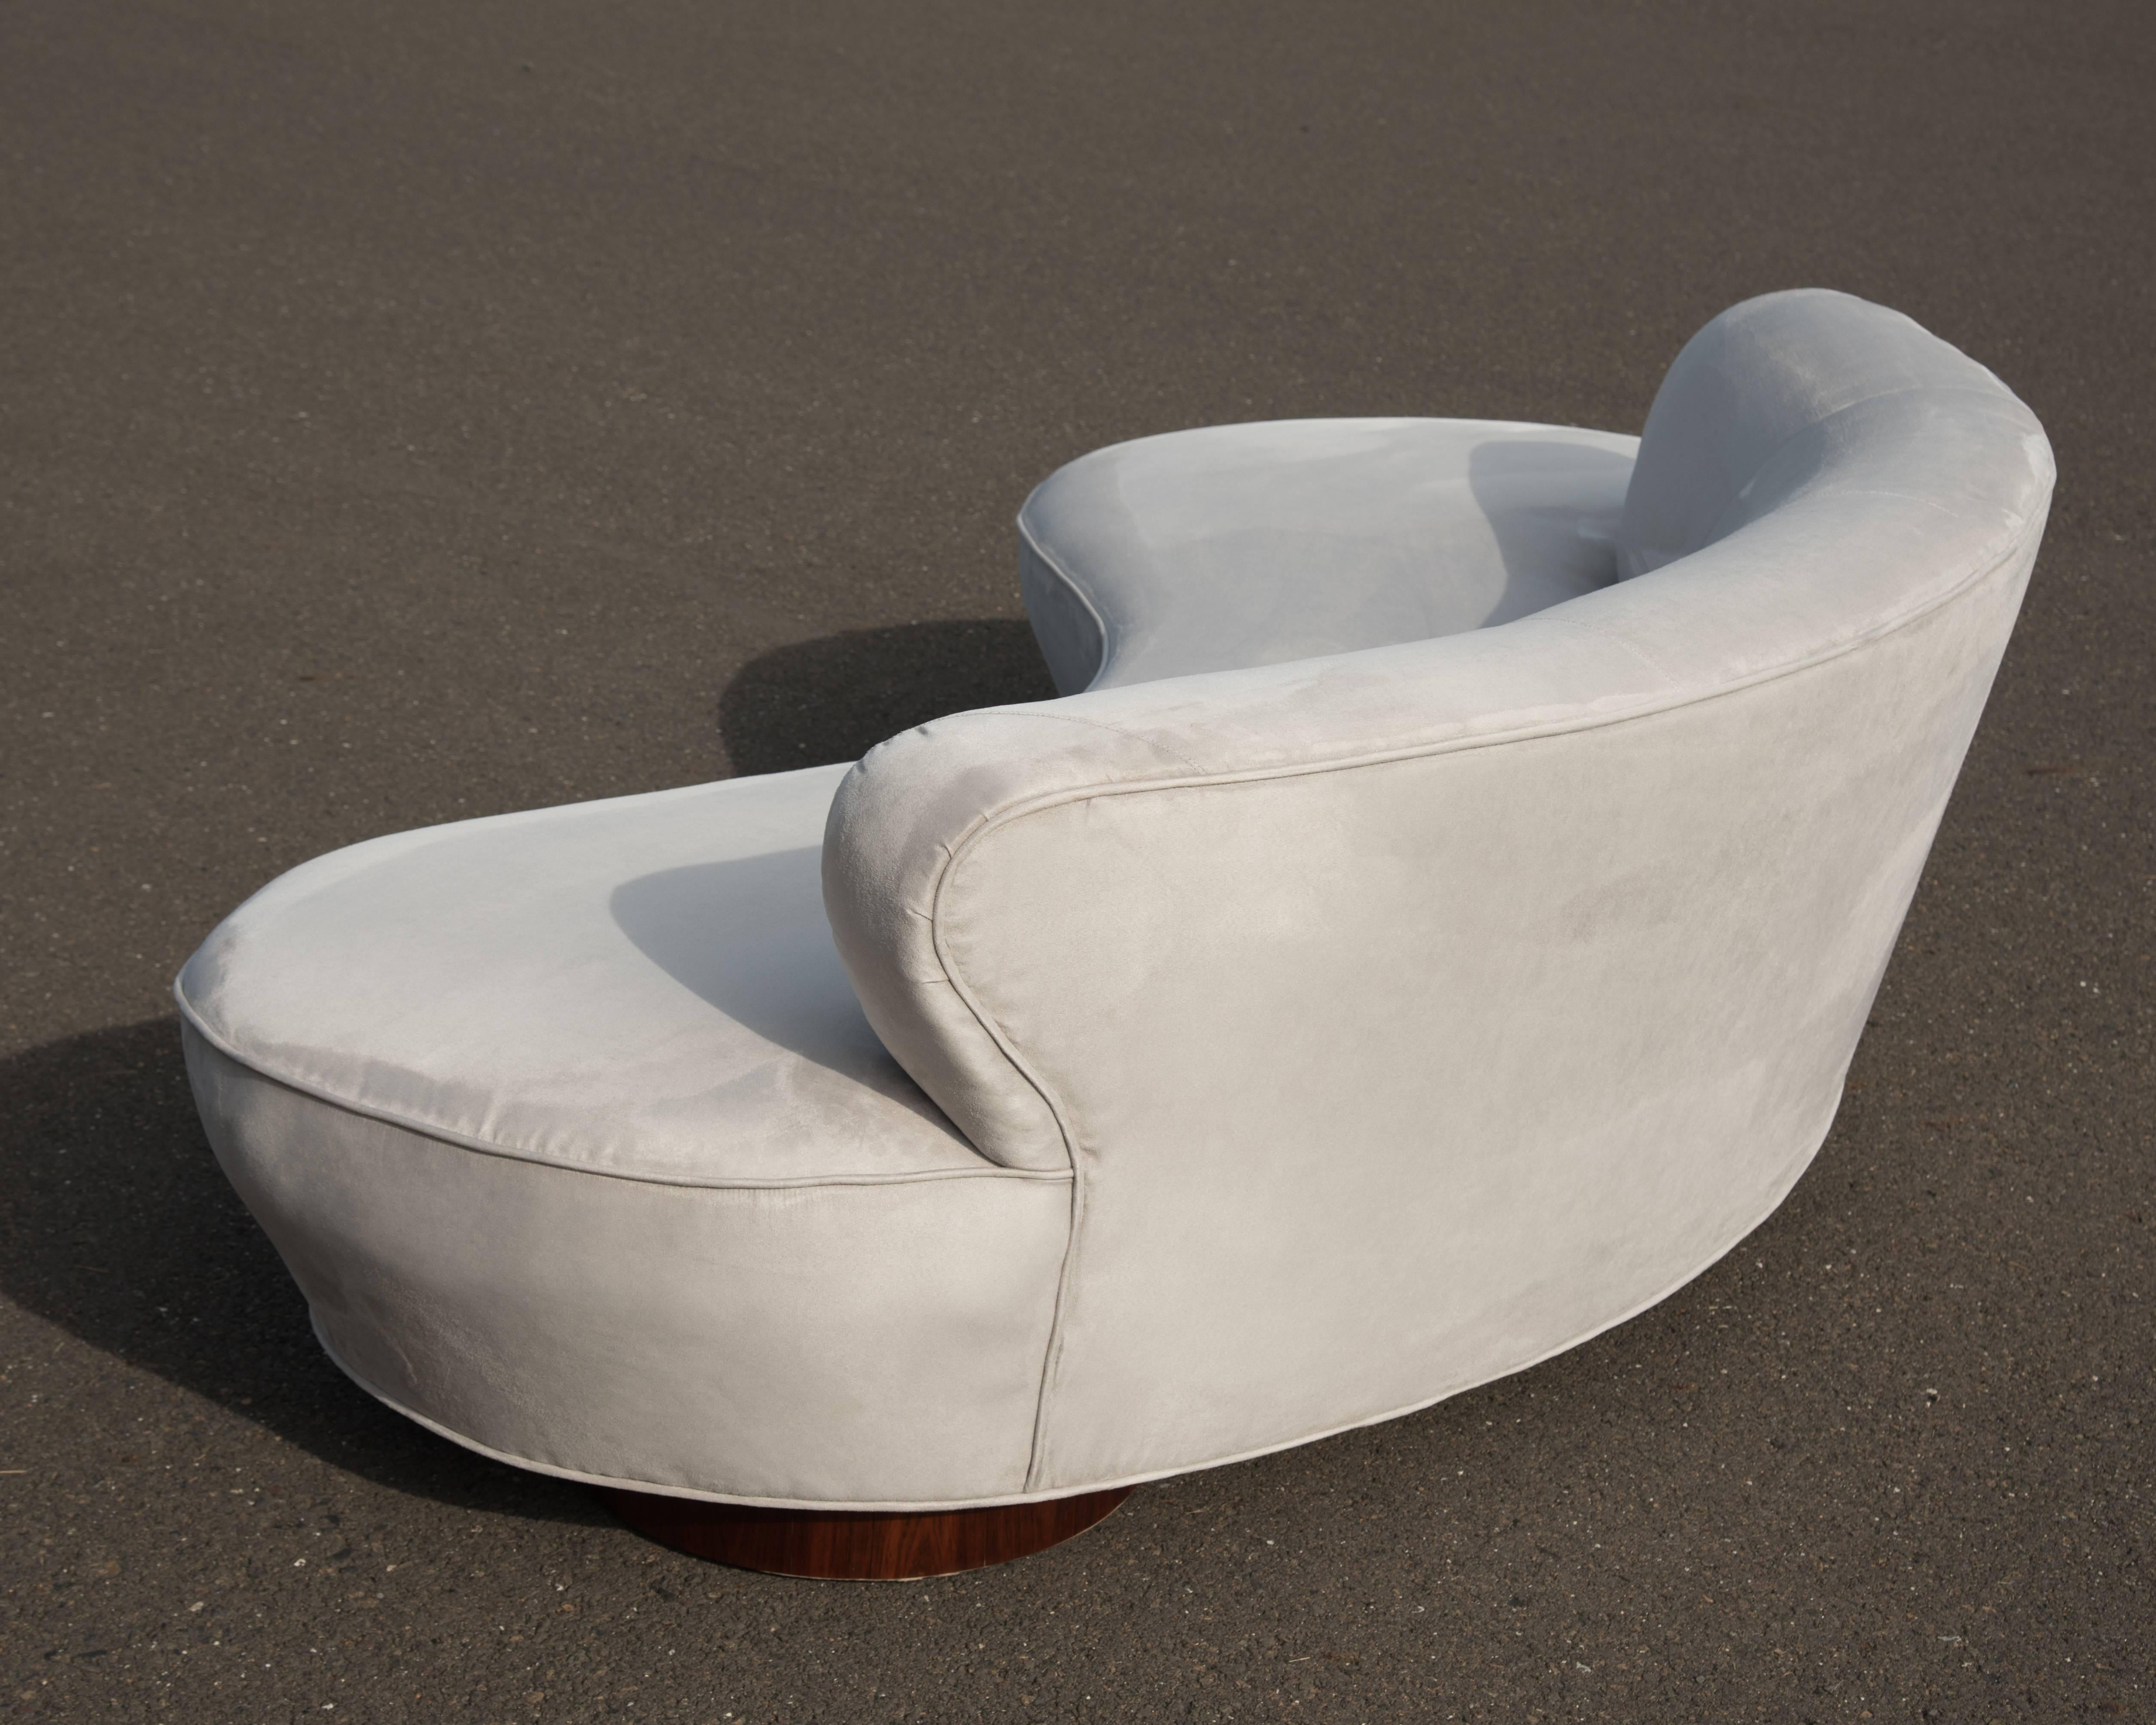 American Smashing Serpentine Cloud Sofa by Vladimir Kagan for Directional